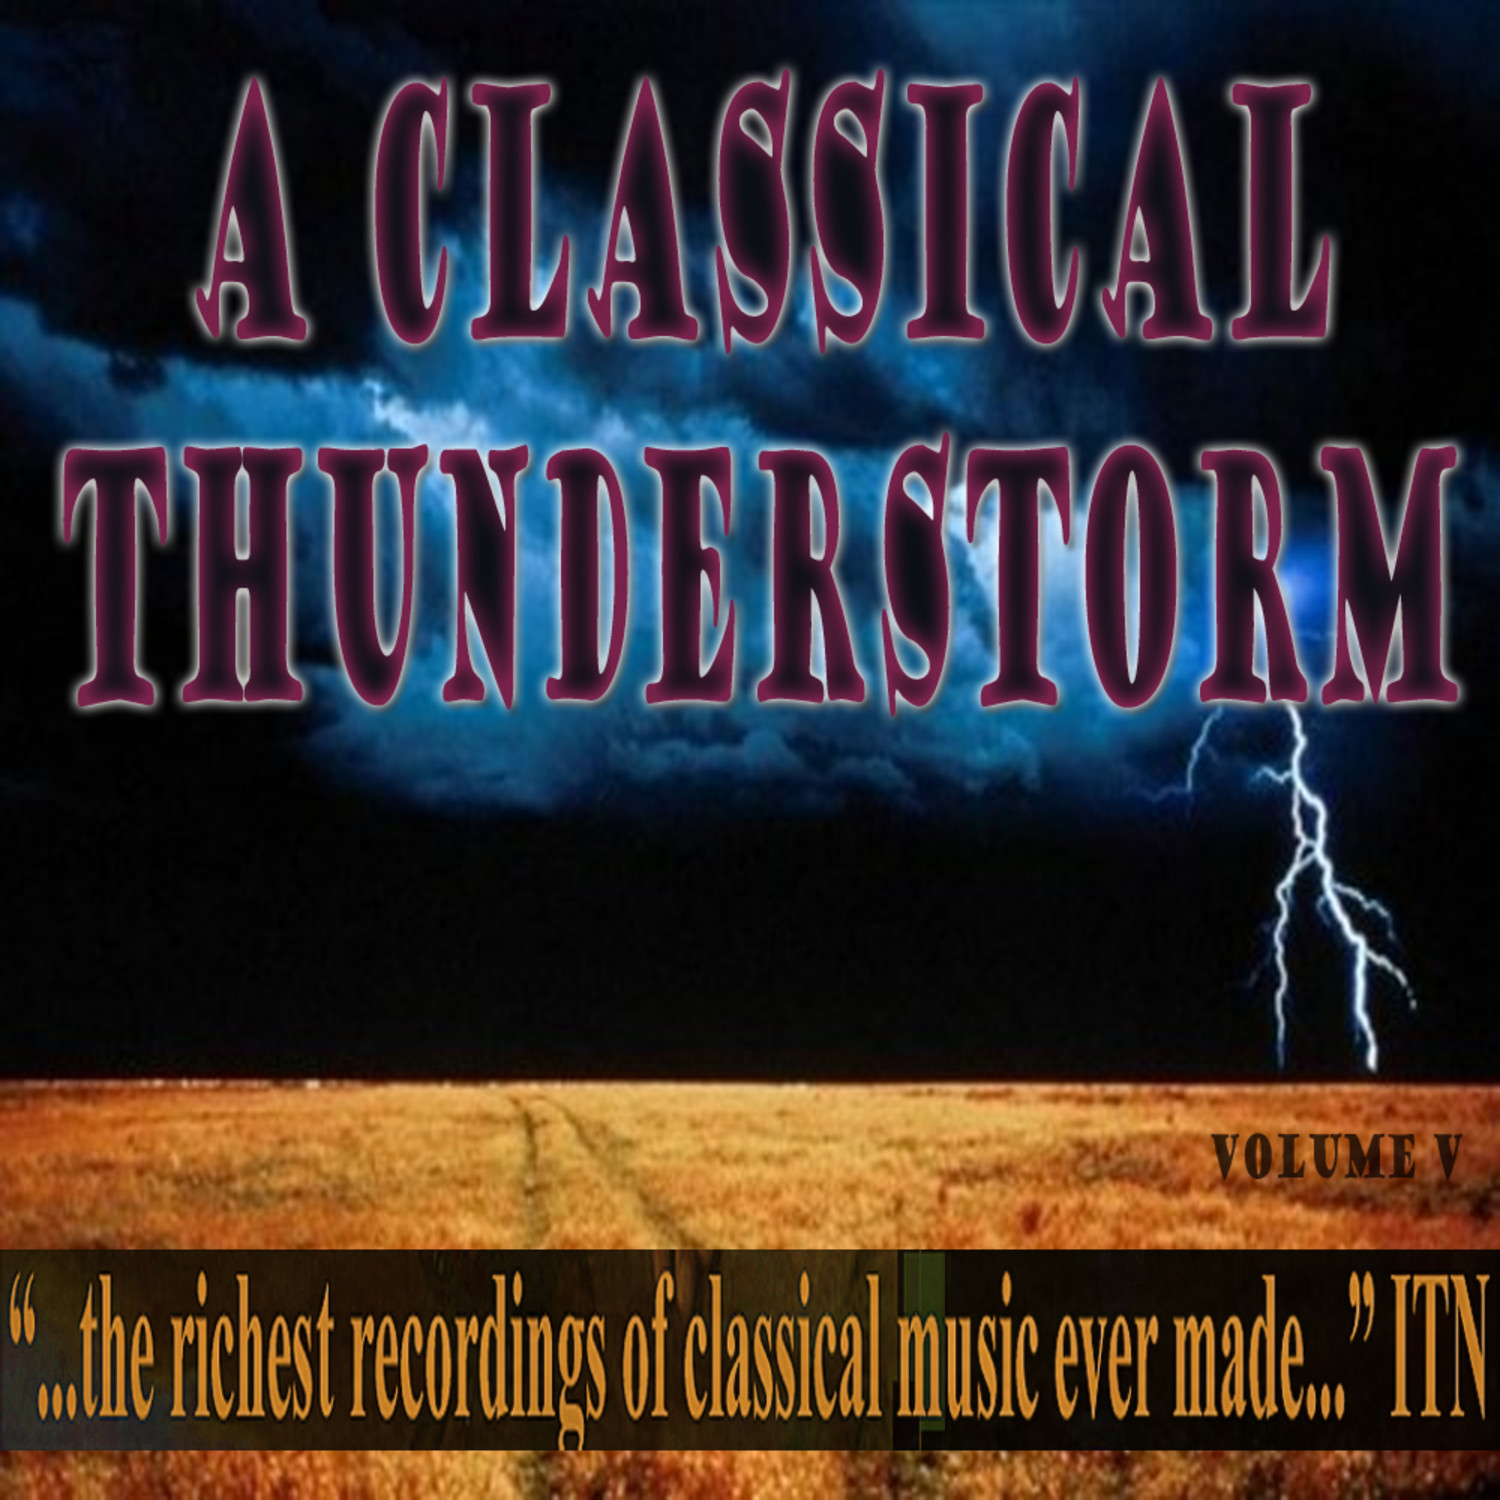 A Classical Thunderstorm Volume V